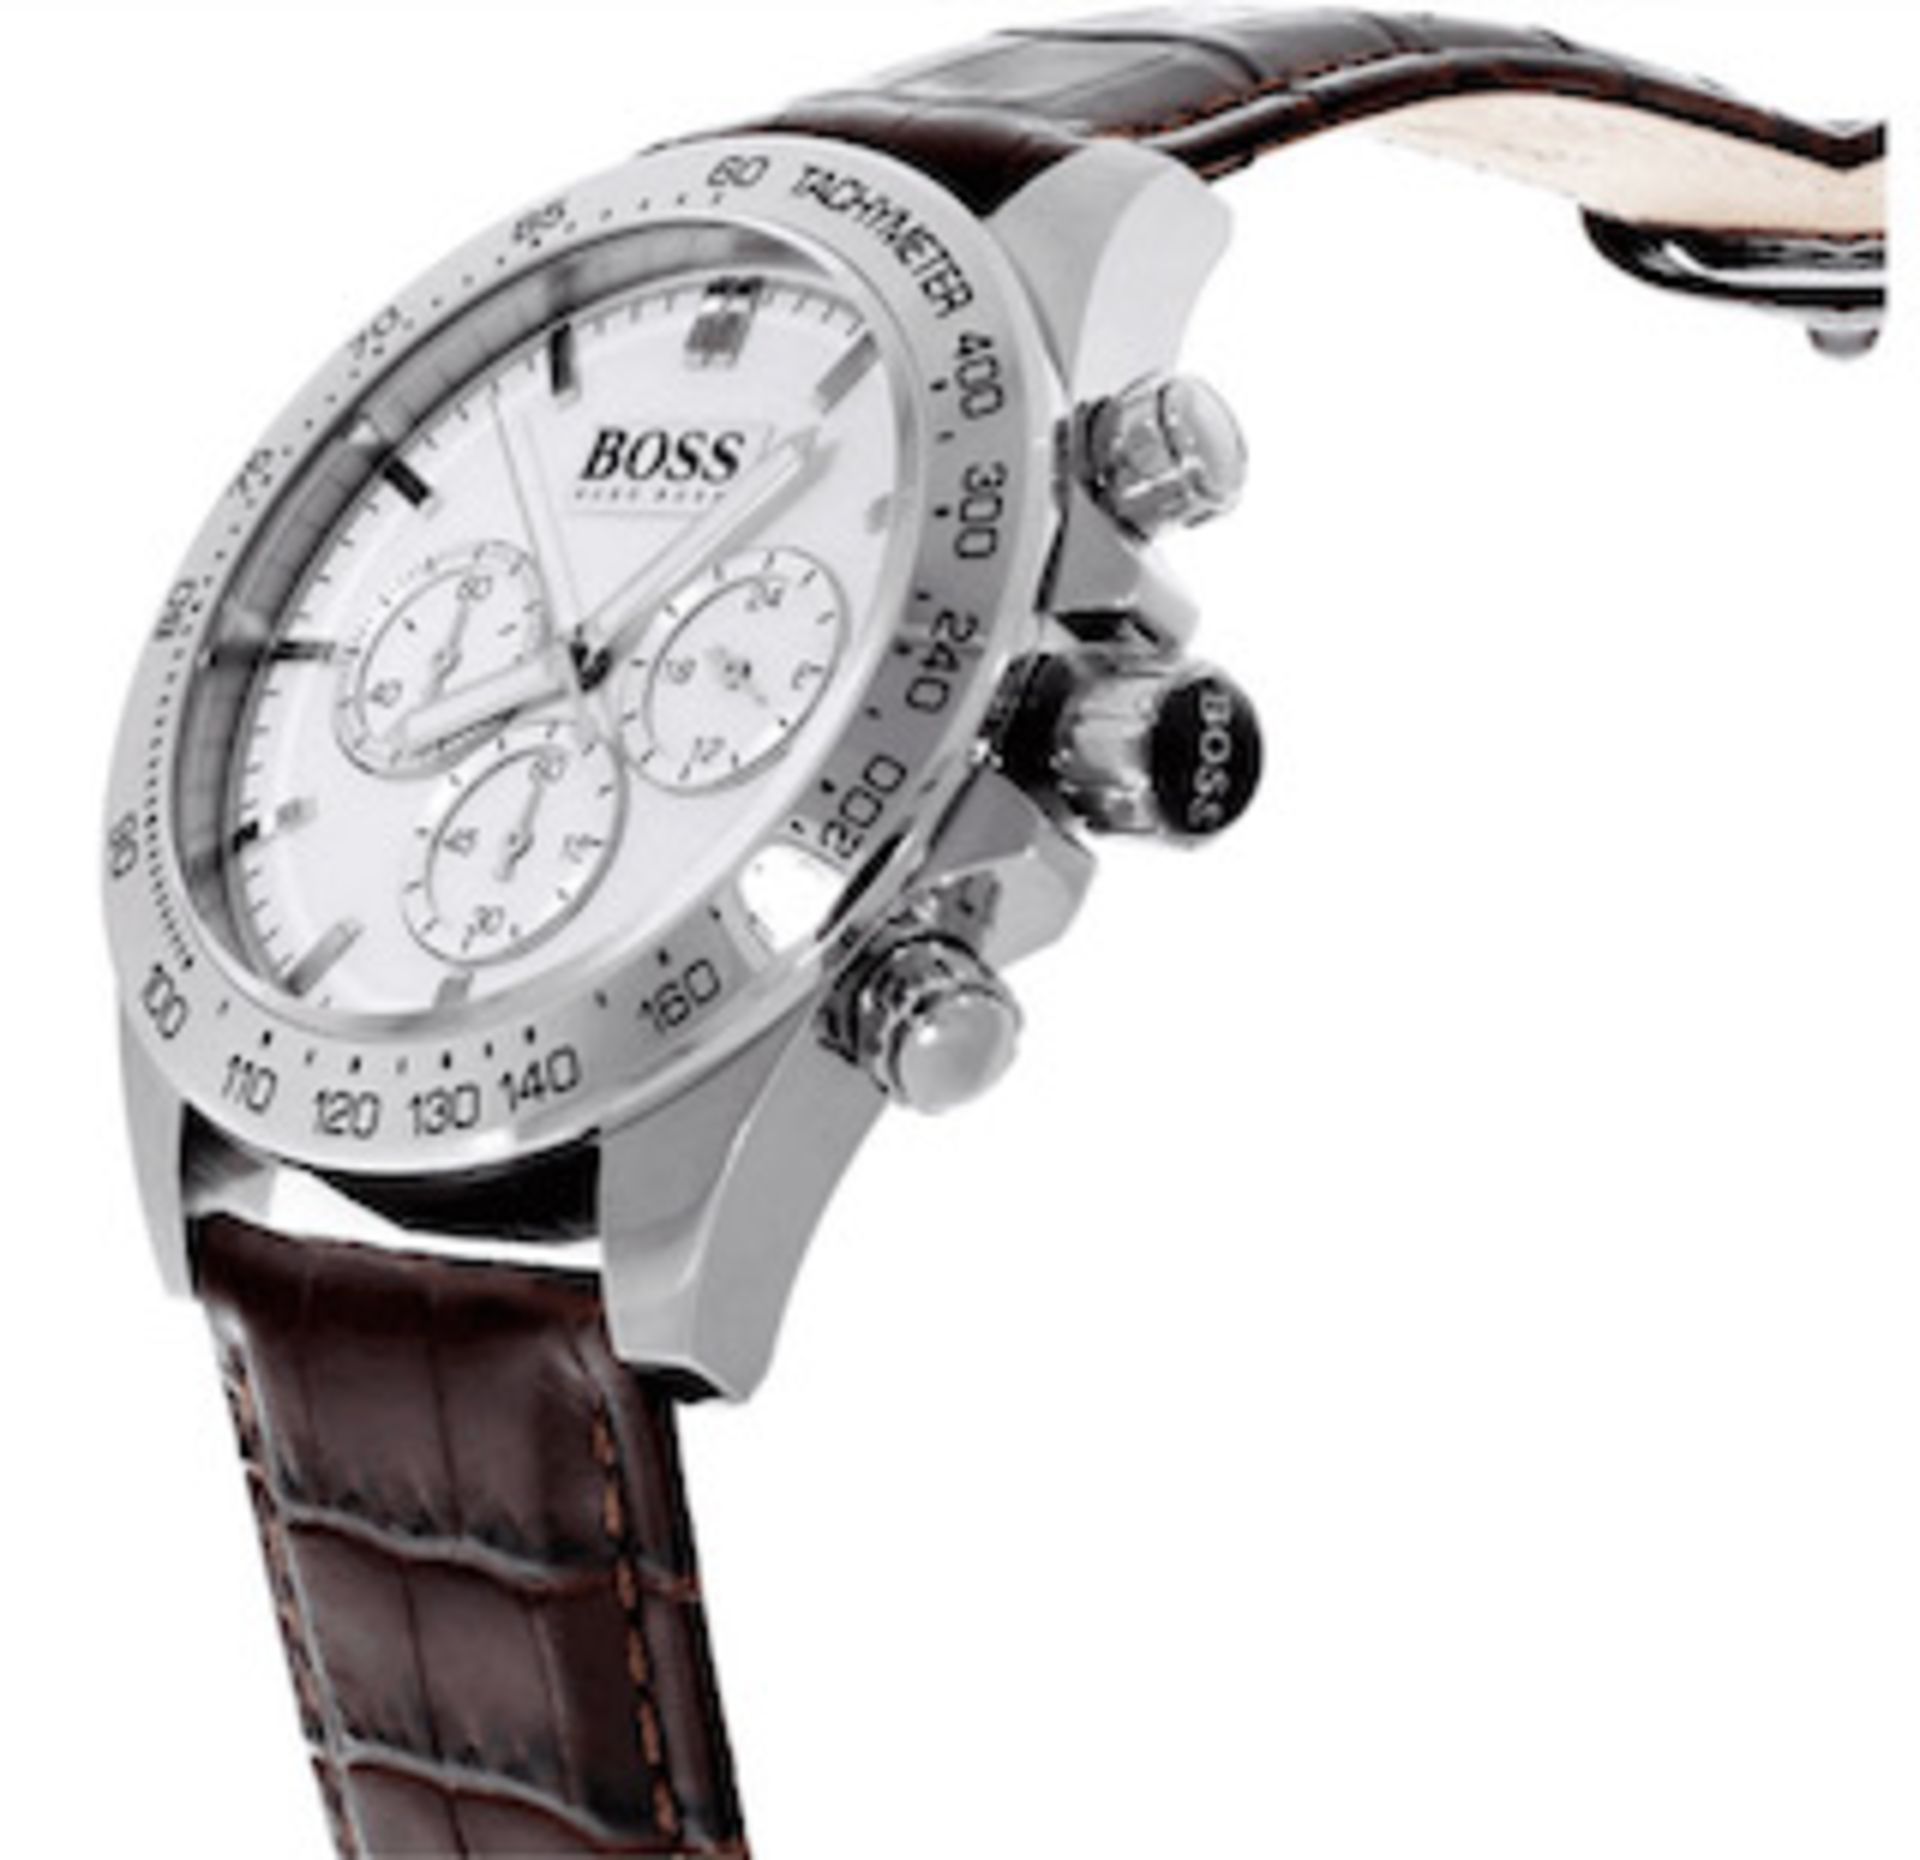 Hugo Boss 1513175 Men's Ikon Brown Leather Strap Chronograph Watch - Image 2 of 6